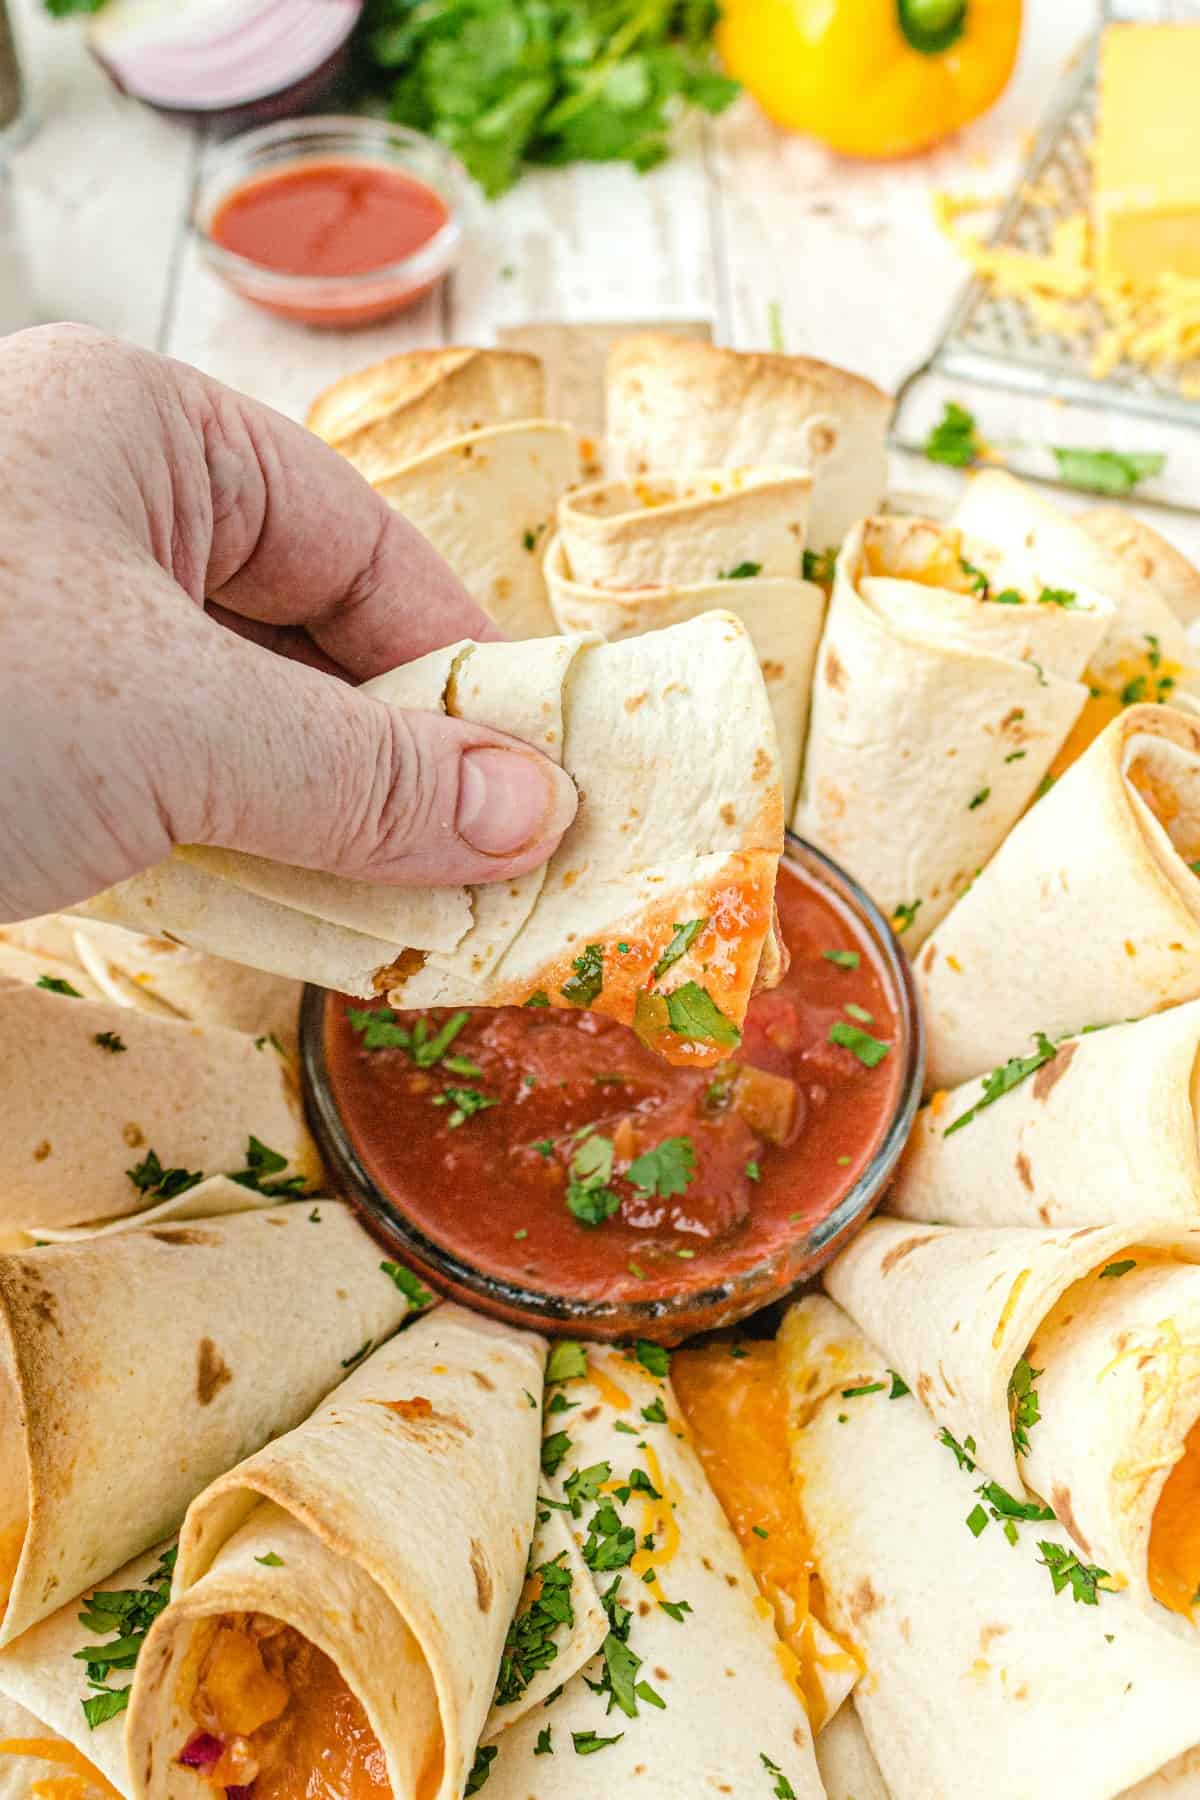 Quesadilla dipped in salsa